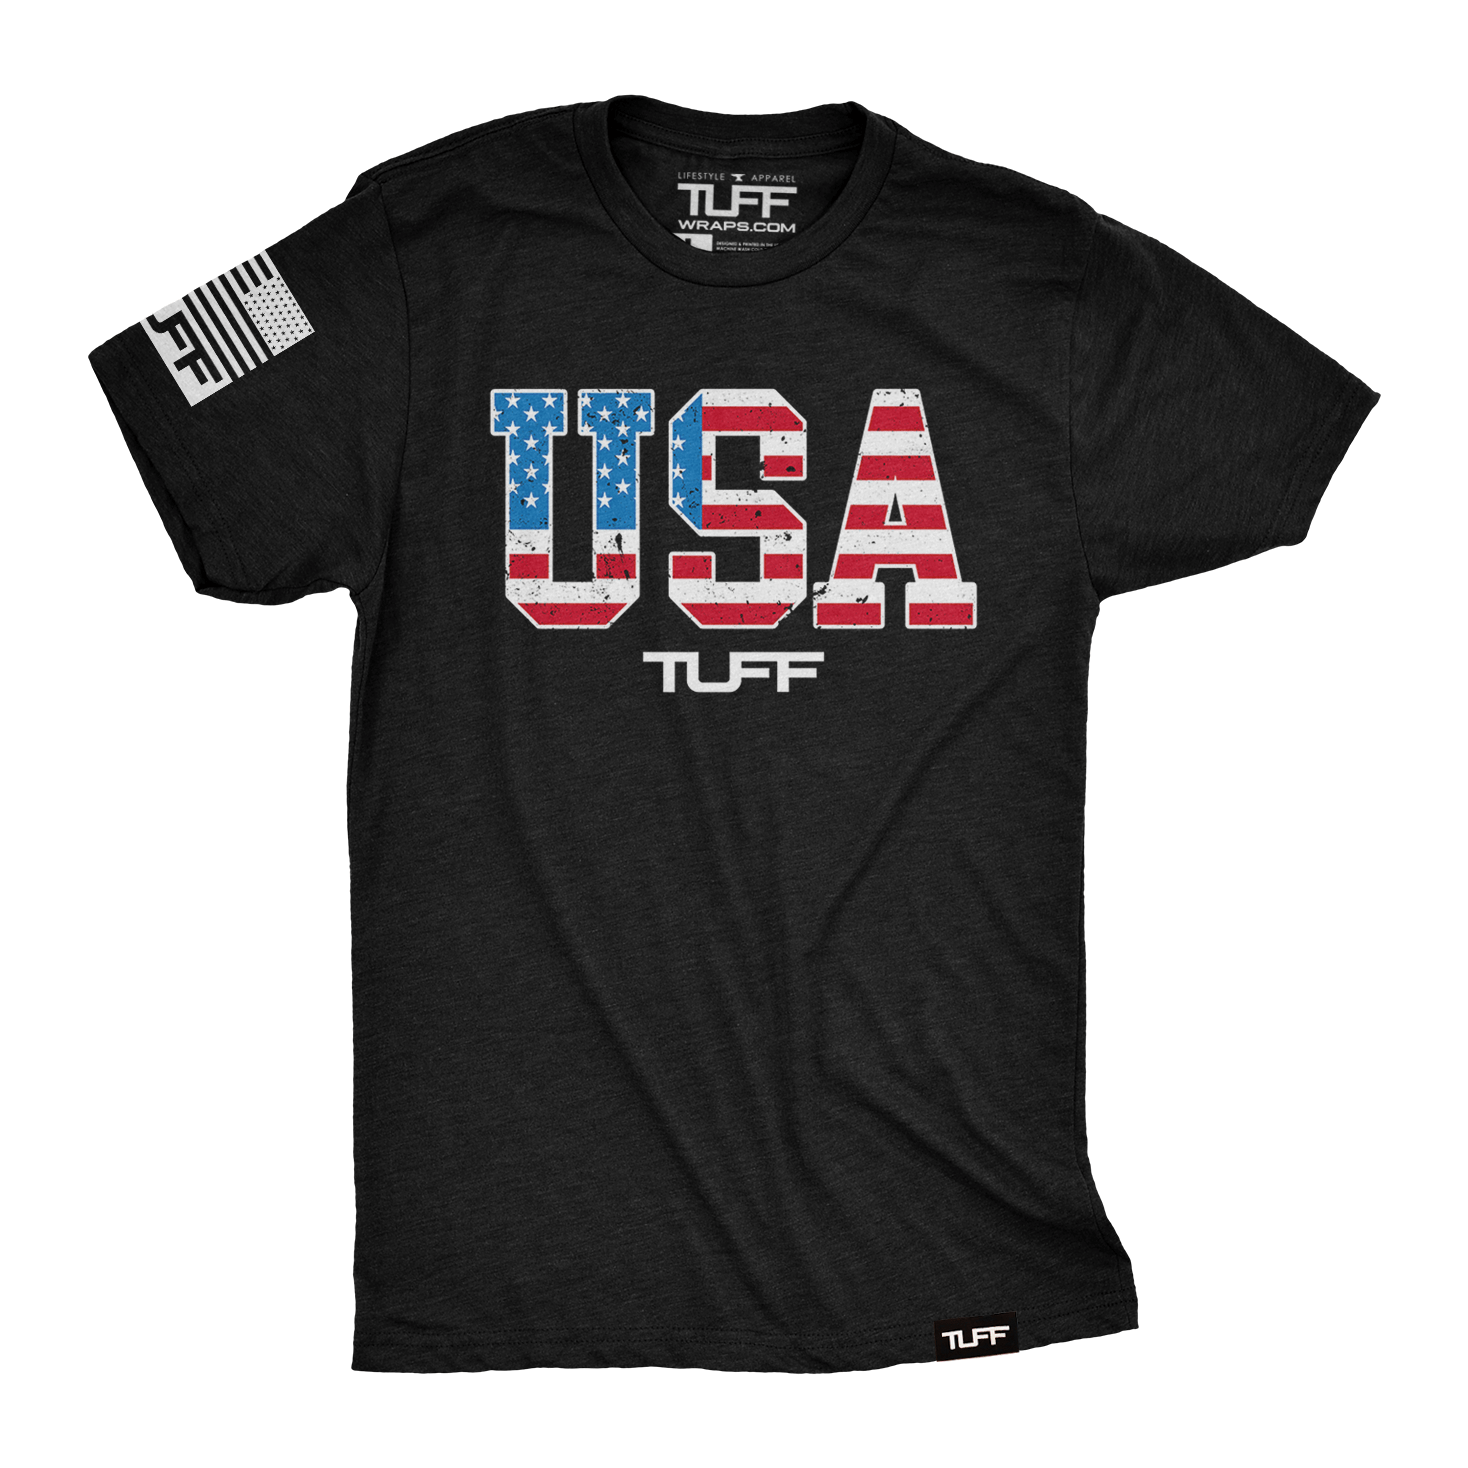 USA TUFF Tee S / Black TuffWraps.com